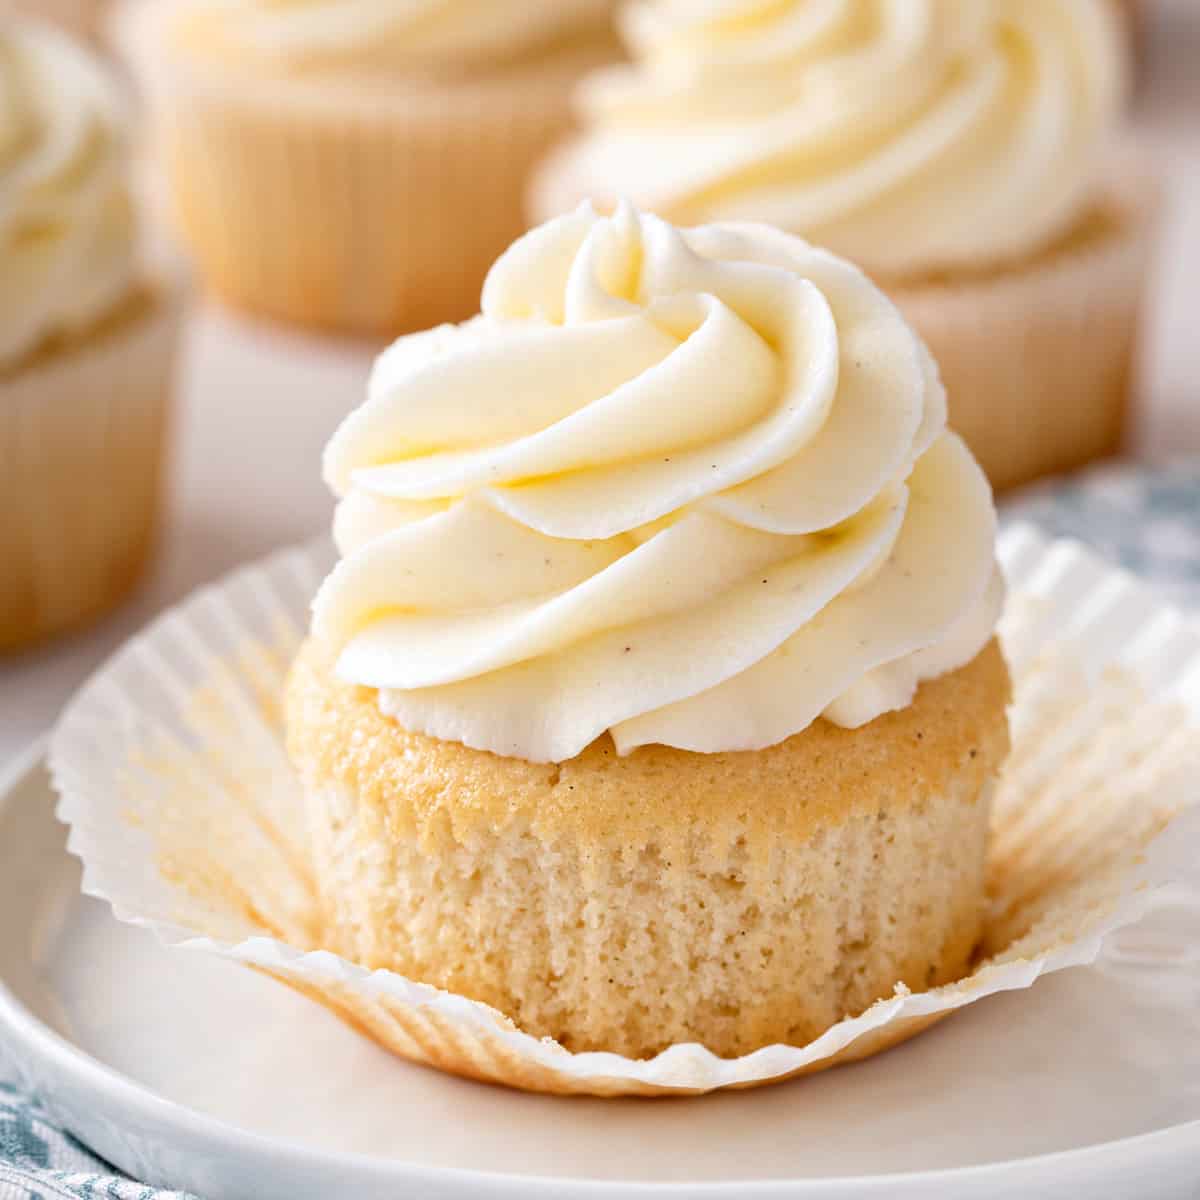 https://www.mybakingaddiction.com/wp-content/uploads/2011/07/unwrapped-vanilla-cupcake-hero.jpg